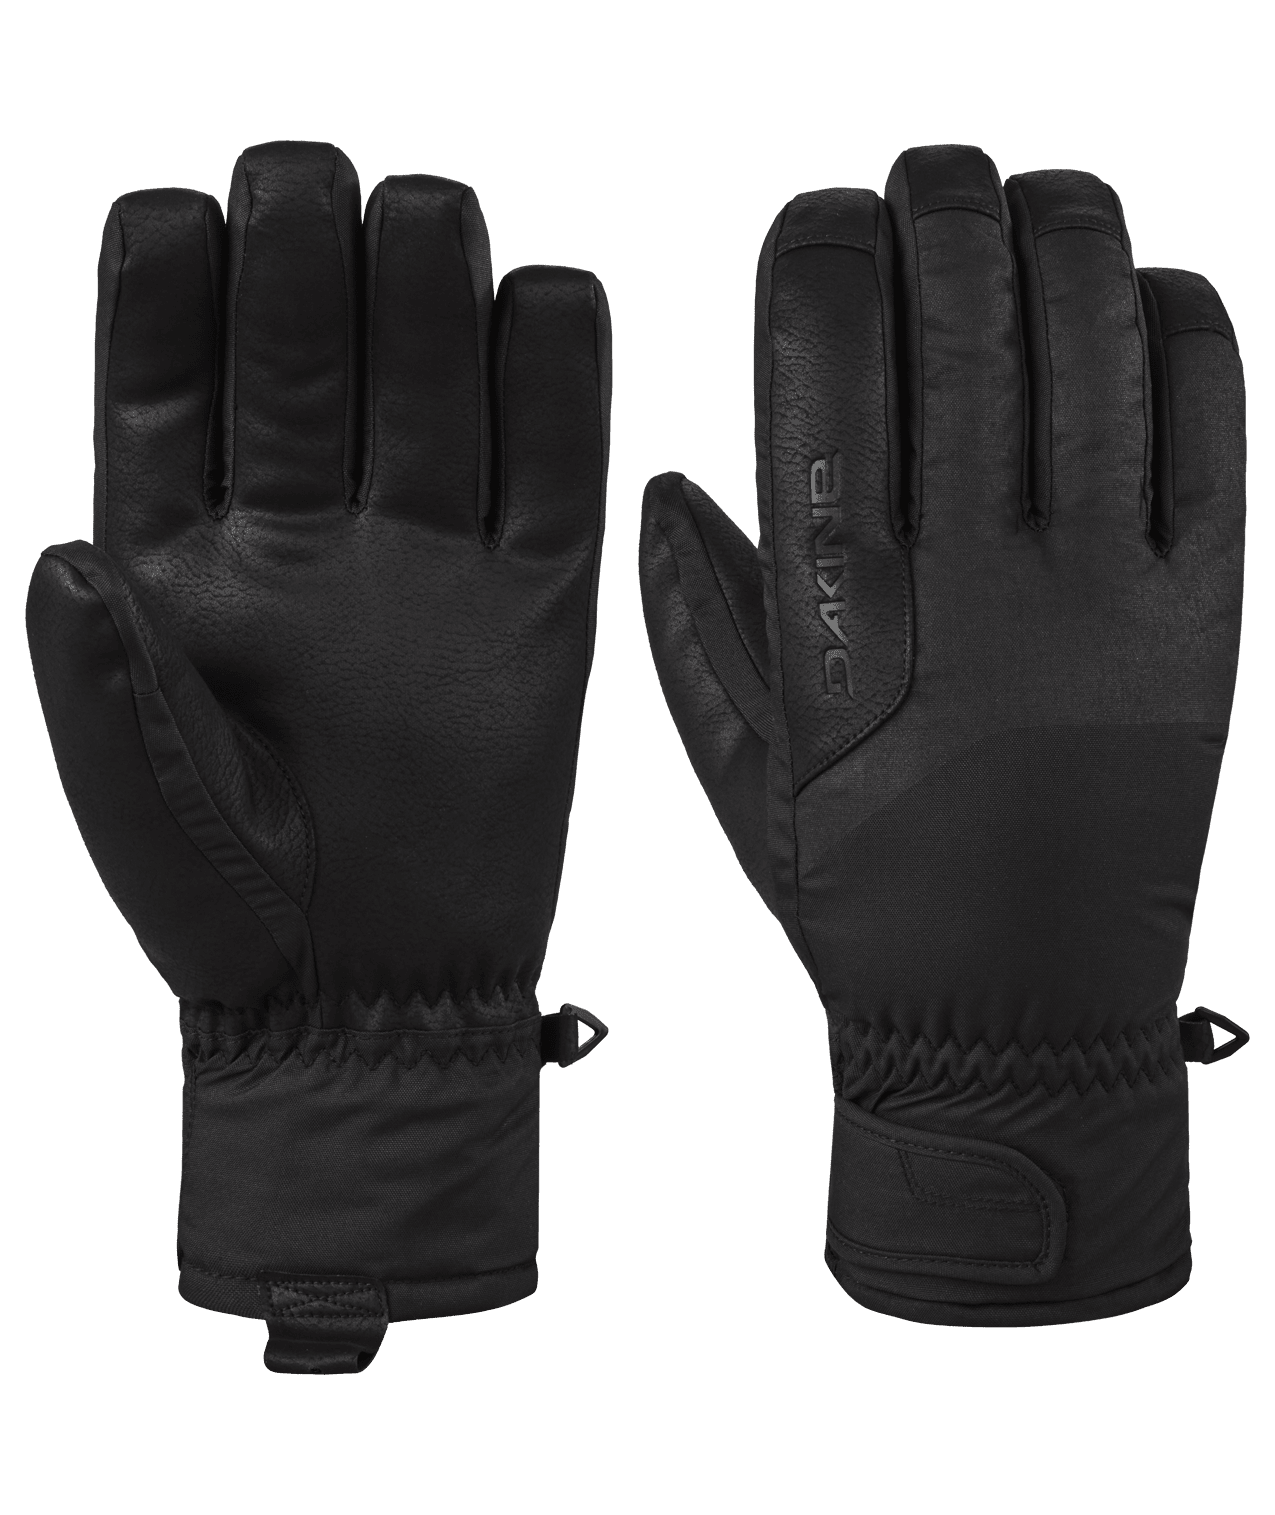 DAKINE Nova Short Glove Black Men's Snow Gloves Dakine 